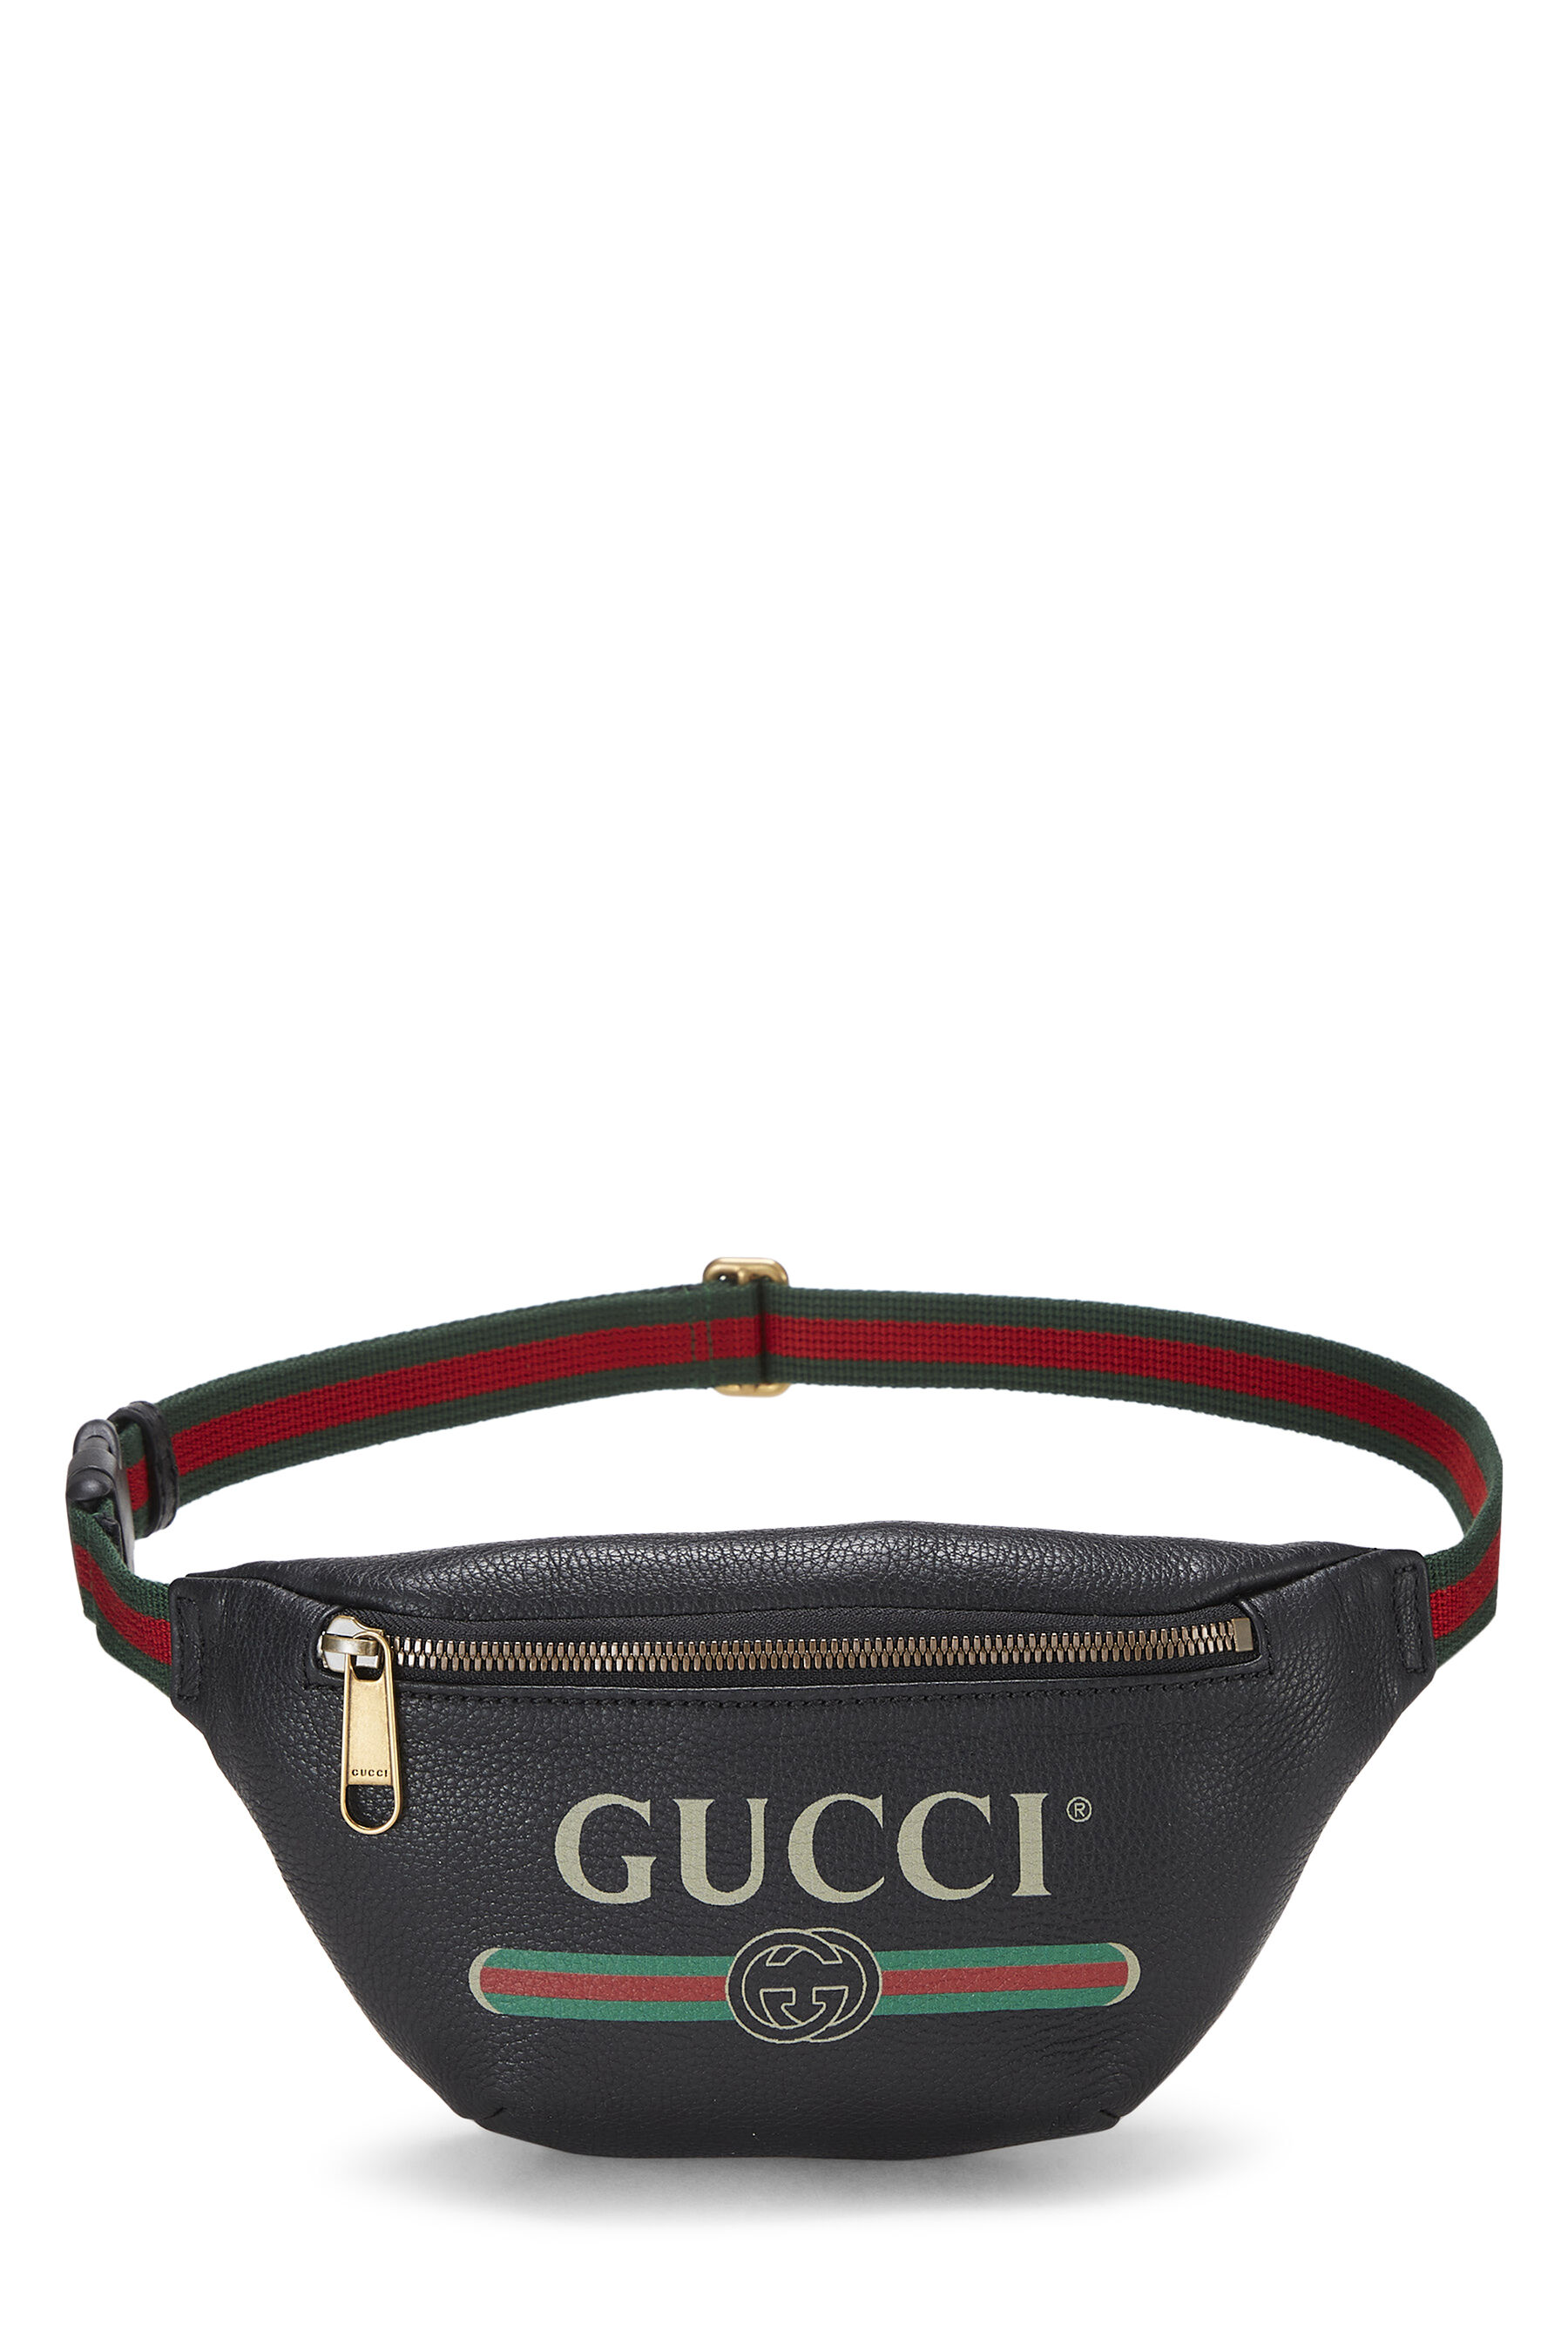 Gucci Black Leather Logo Belt Bag Small